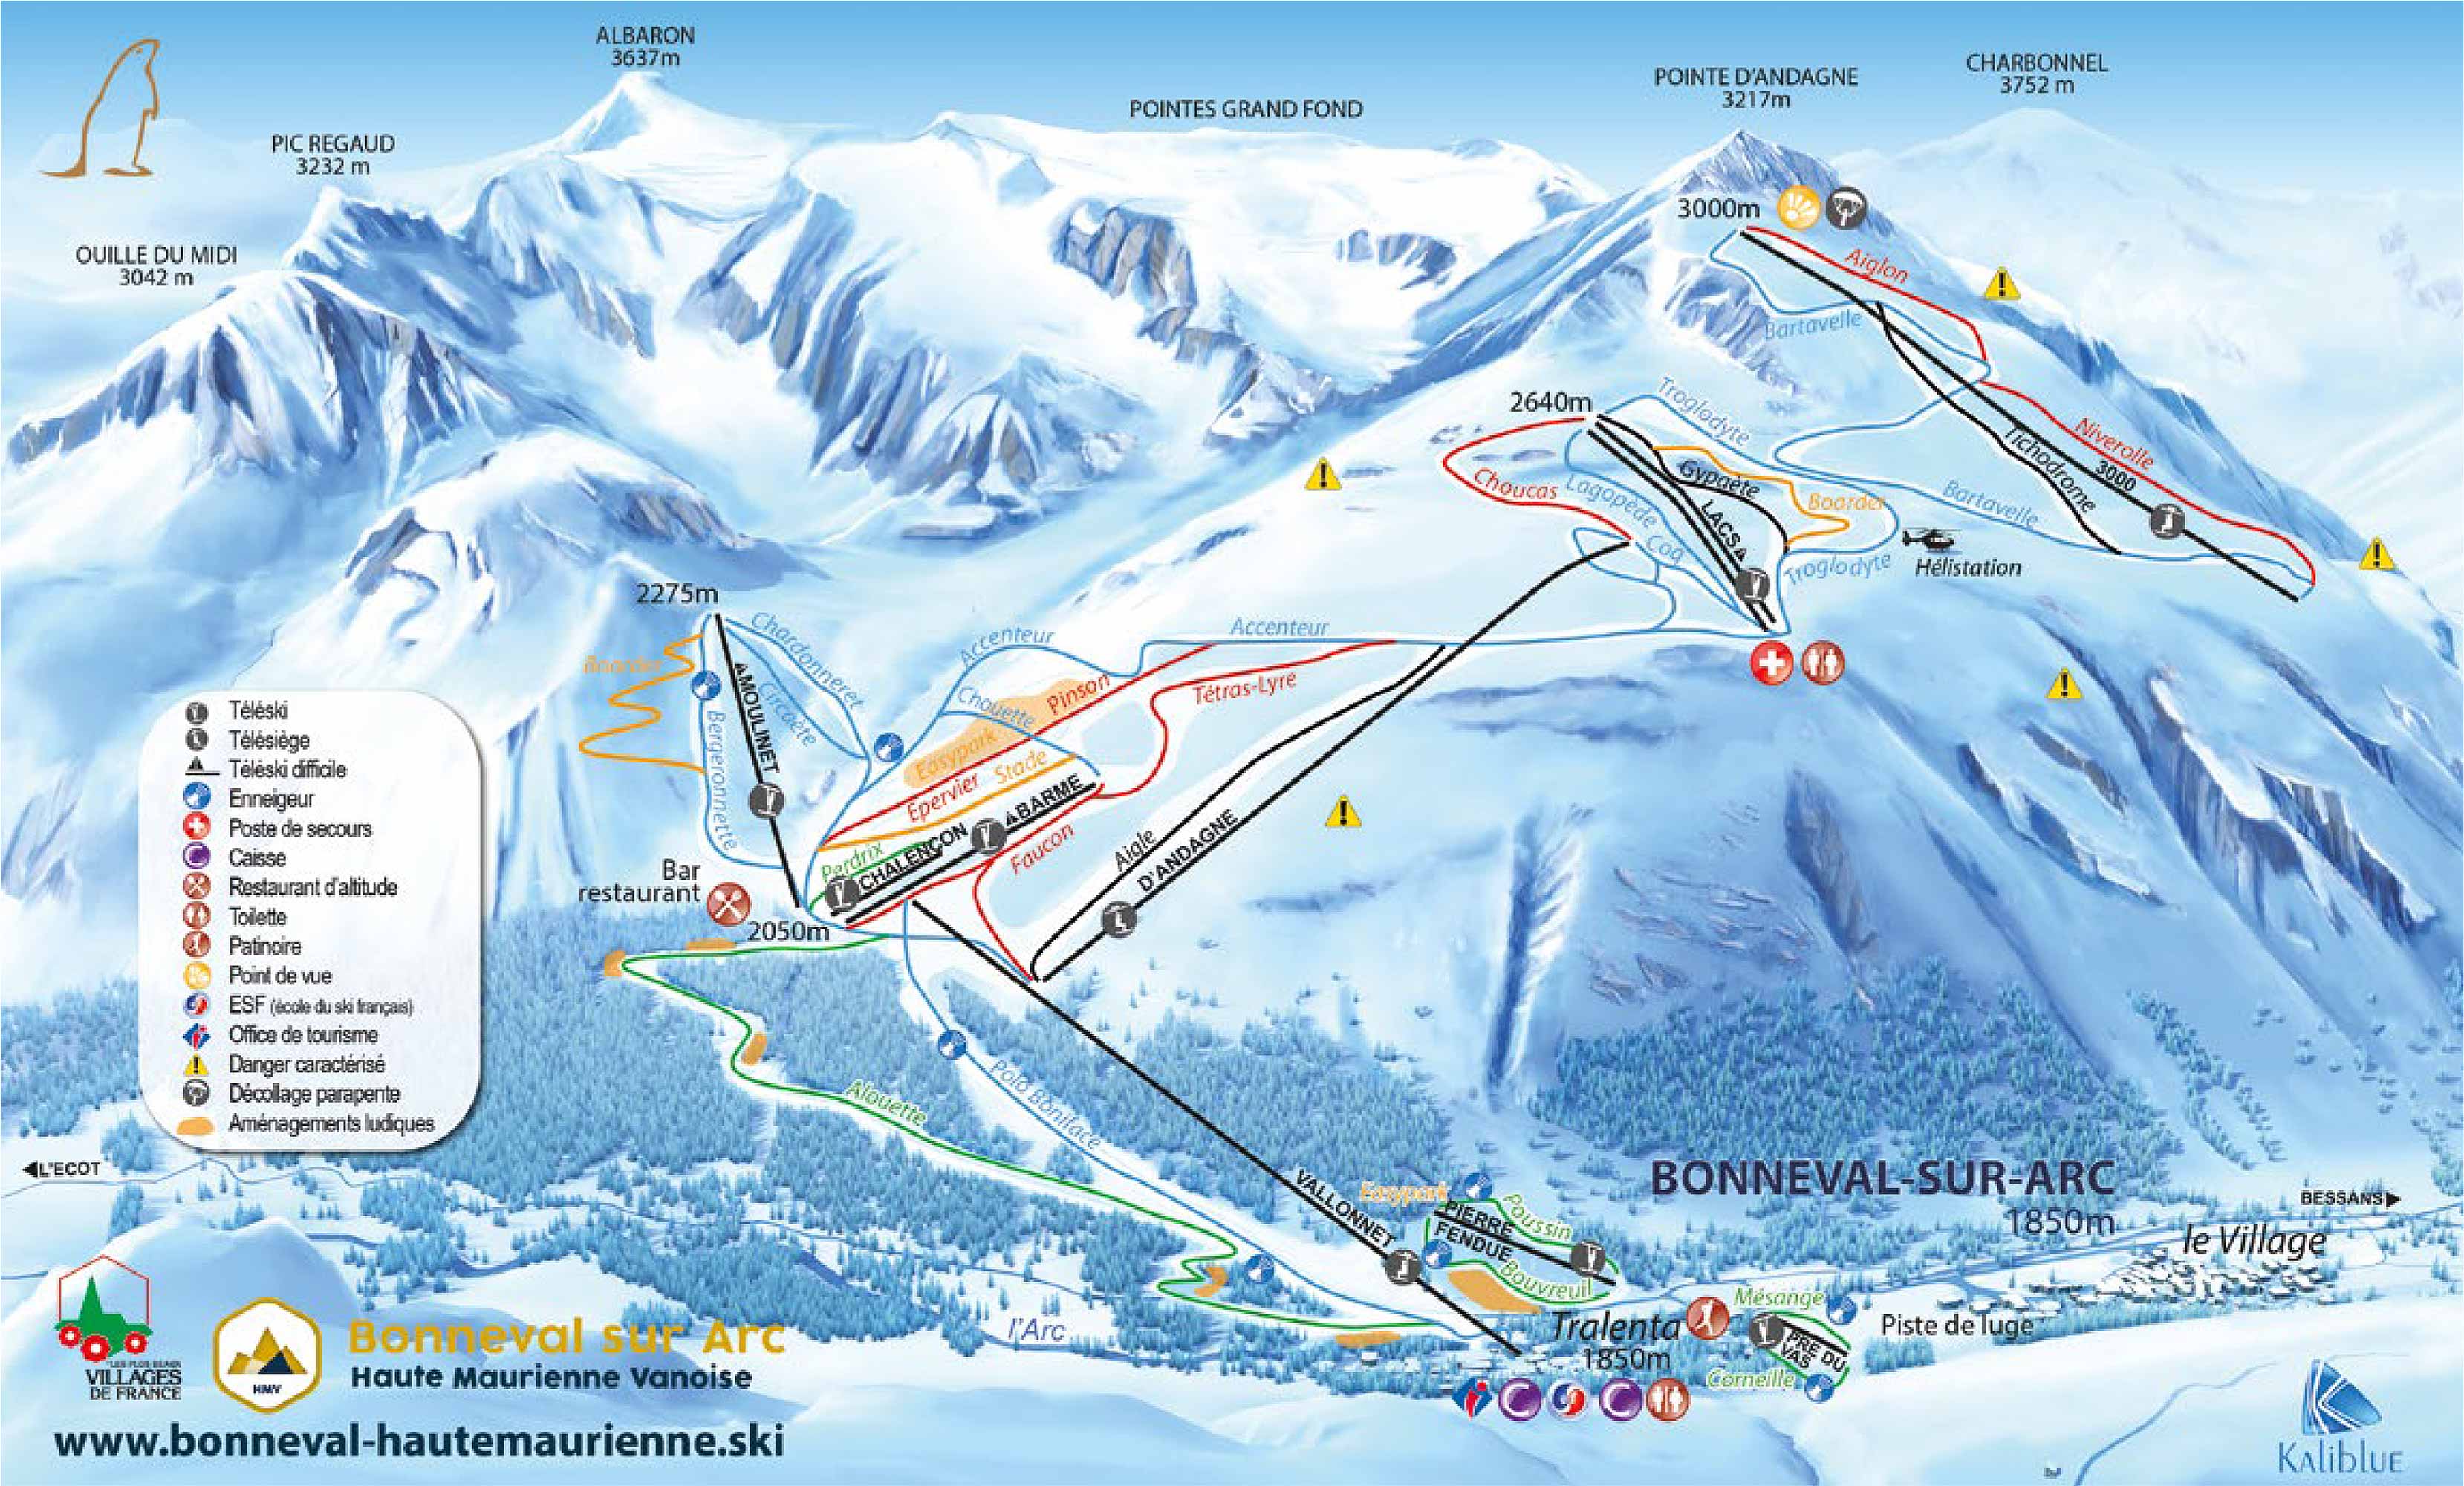 Bonneval Sur Arc Ski Resort Piste Maps